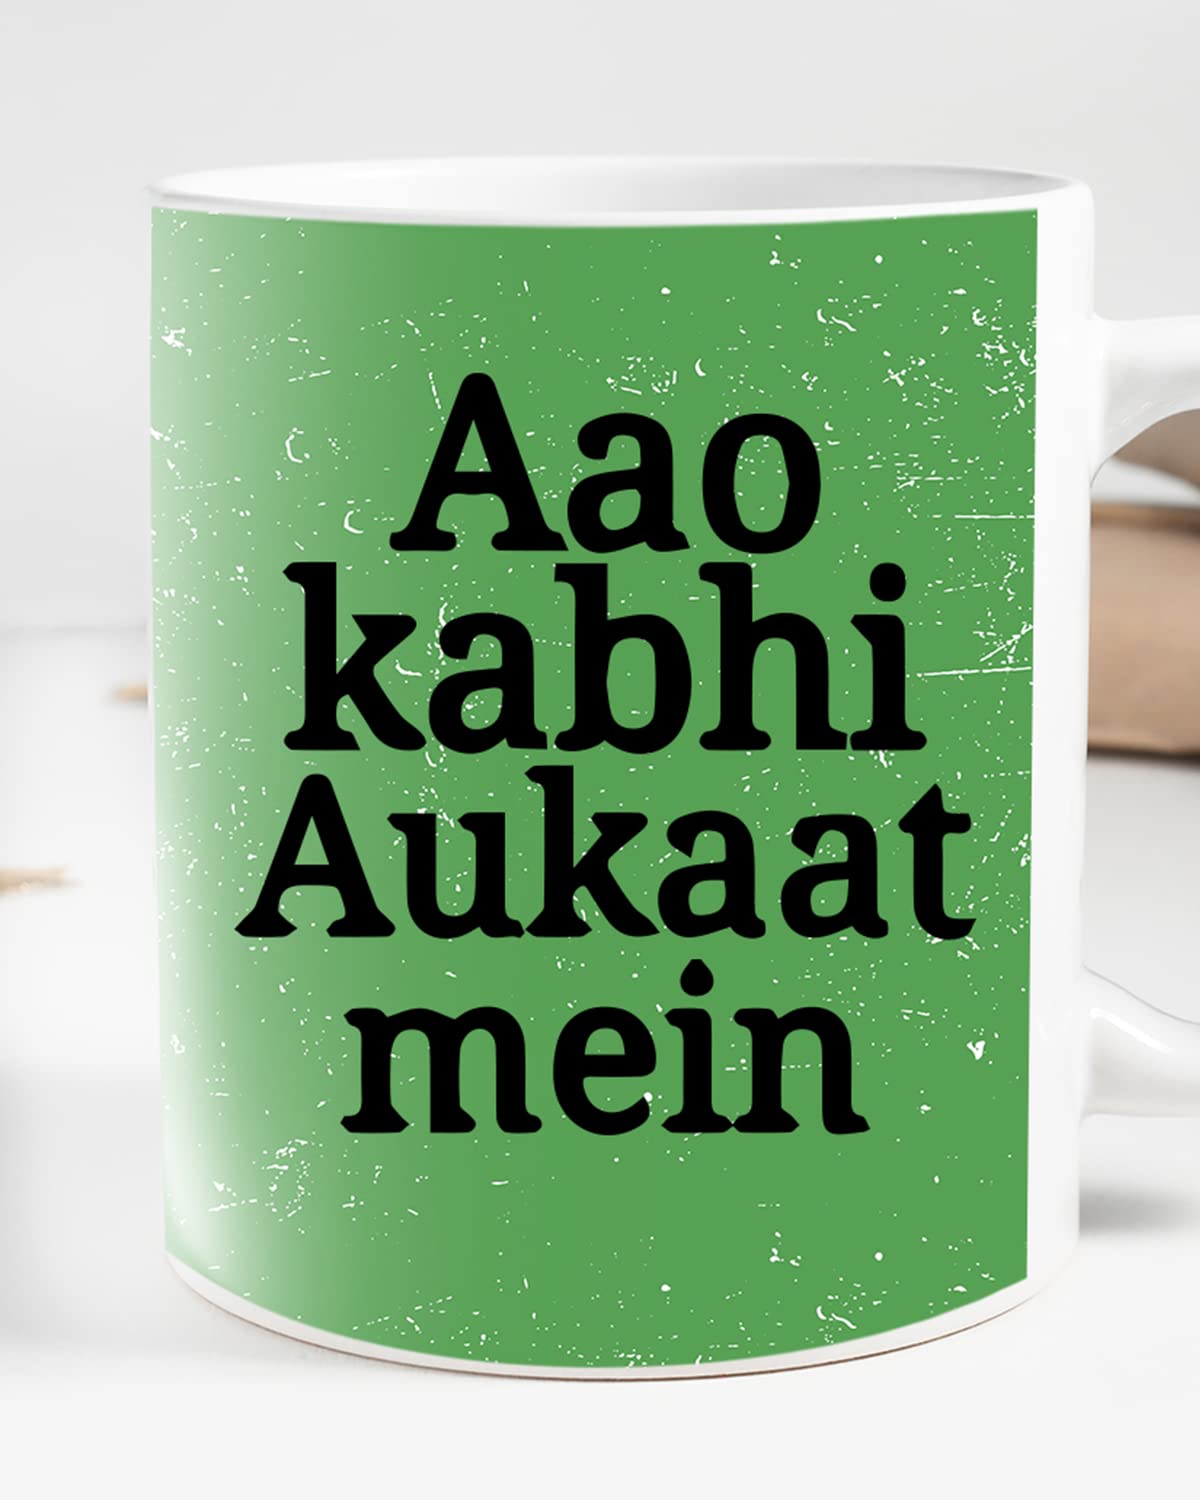 AAO KABHI AUKAAT Mein Coffee Mug - Gift for Friend, Birthday Gift, Birthday Mug, Sarcasm Quotes Mug, Mugs with Funny & Funky Dialogues, Bollywood Mugs, Funny Mugs for Him & Her